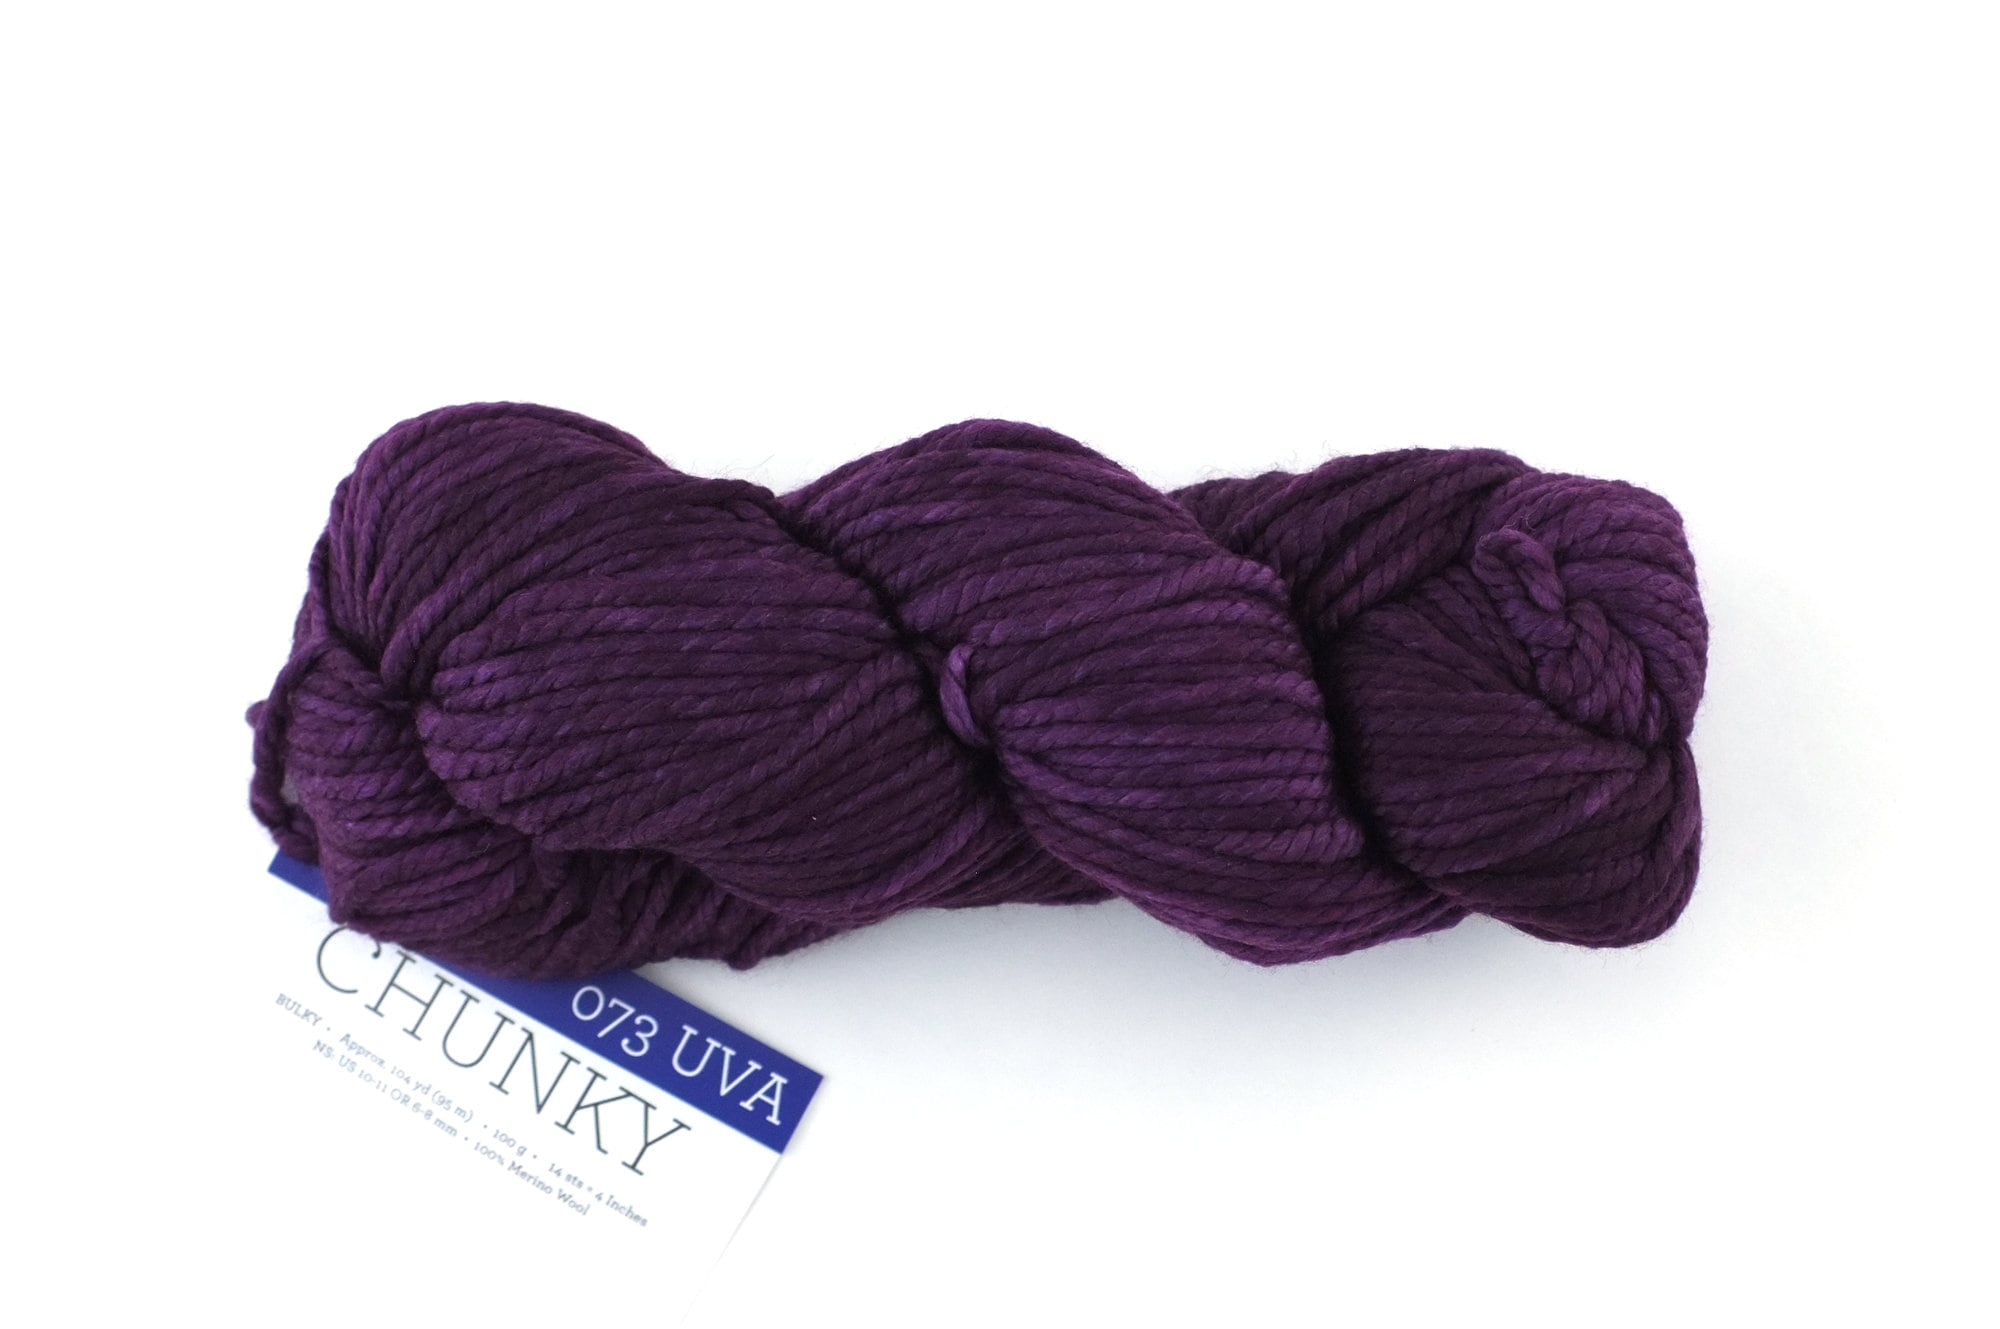 Chunky Yarn: Purple Big Value Chunky Yarn. 100g Ball of King Cole Big Value  Chunky Yarn in Purple 